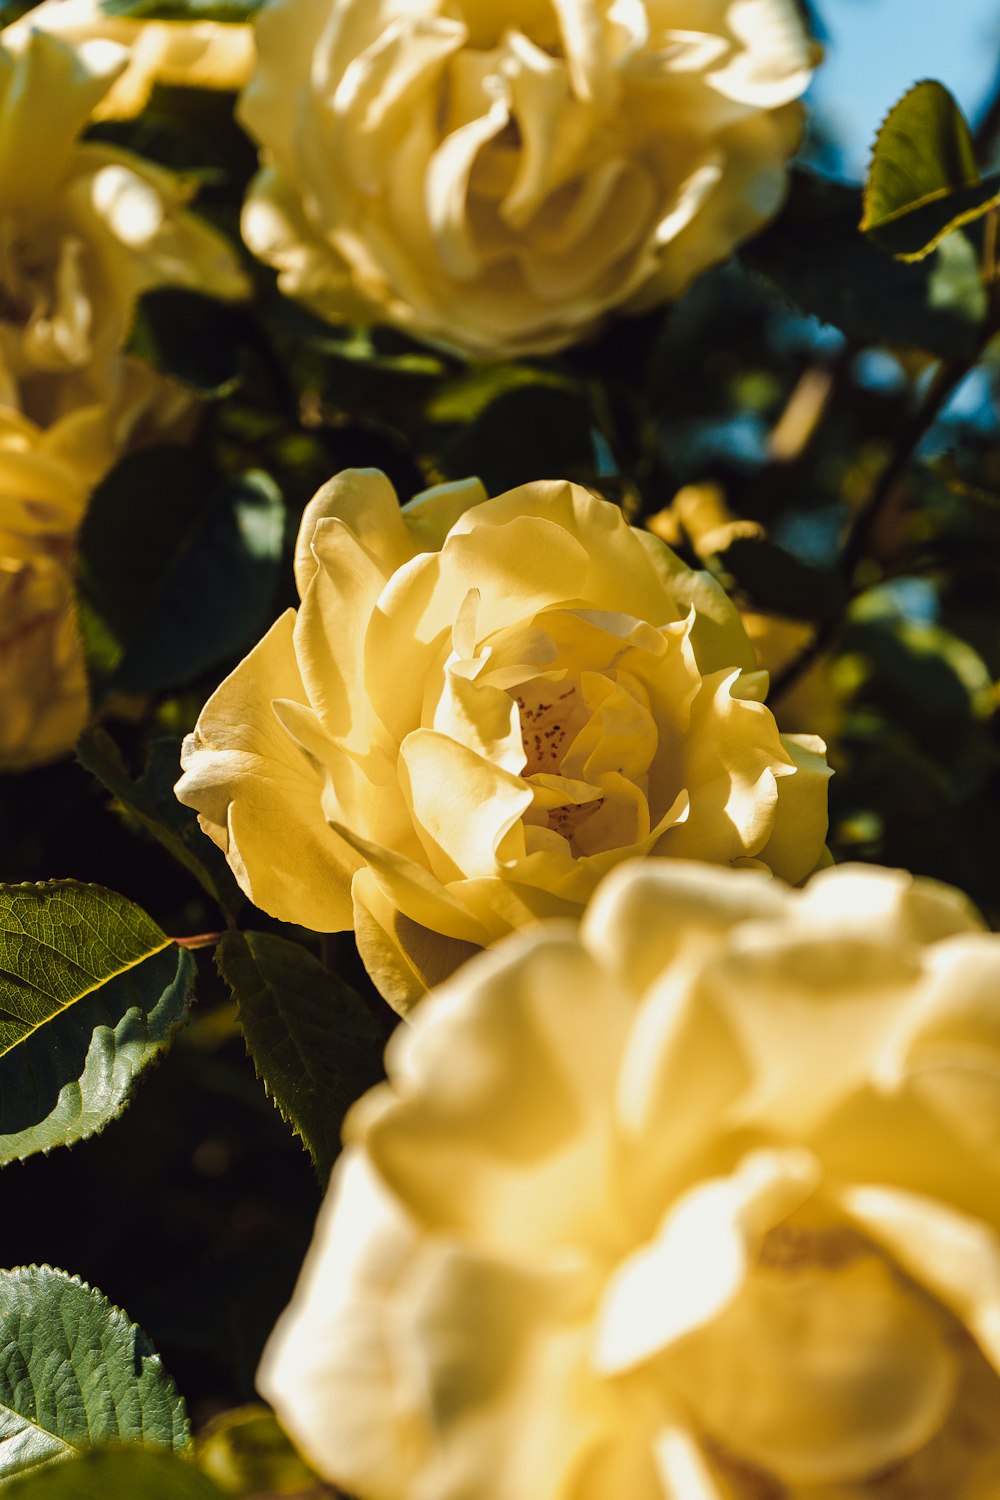 yellow rose in bloom during daytime